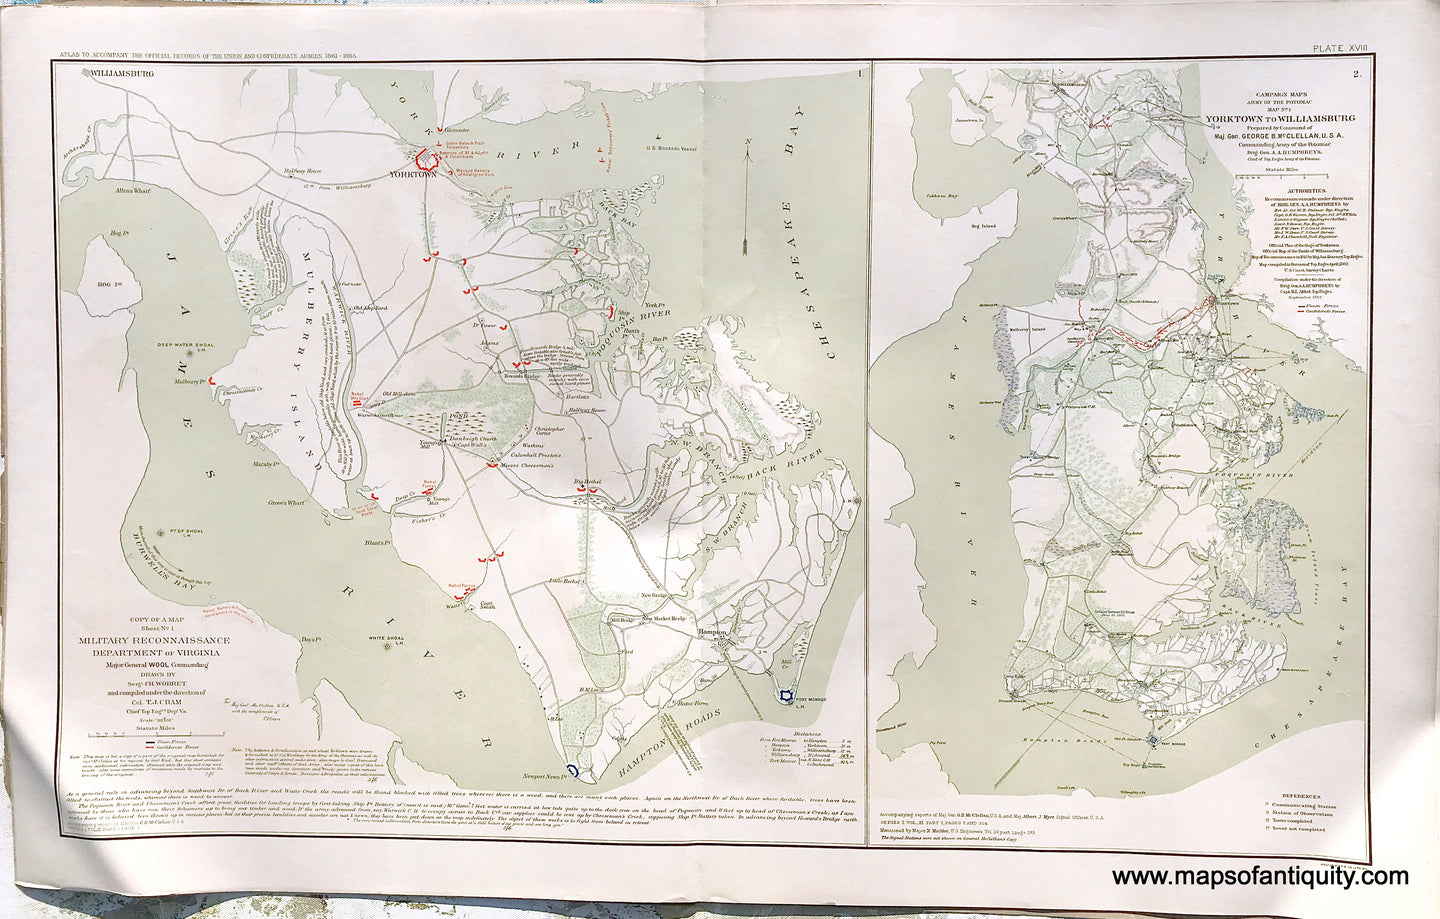 Antique-Lithograph-Print-Plate-18.-Military-Reconnaissance-Department-of-Virginia-(sheet-No.1)-/-Yorktown-to-Williamsburg-September-1862-1892-US-War-Dept.-Civil-War-Civil-War-1800s-19th-century-Maps-of-Antiquity